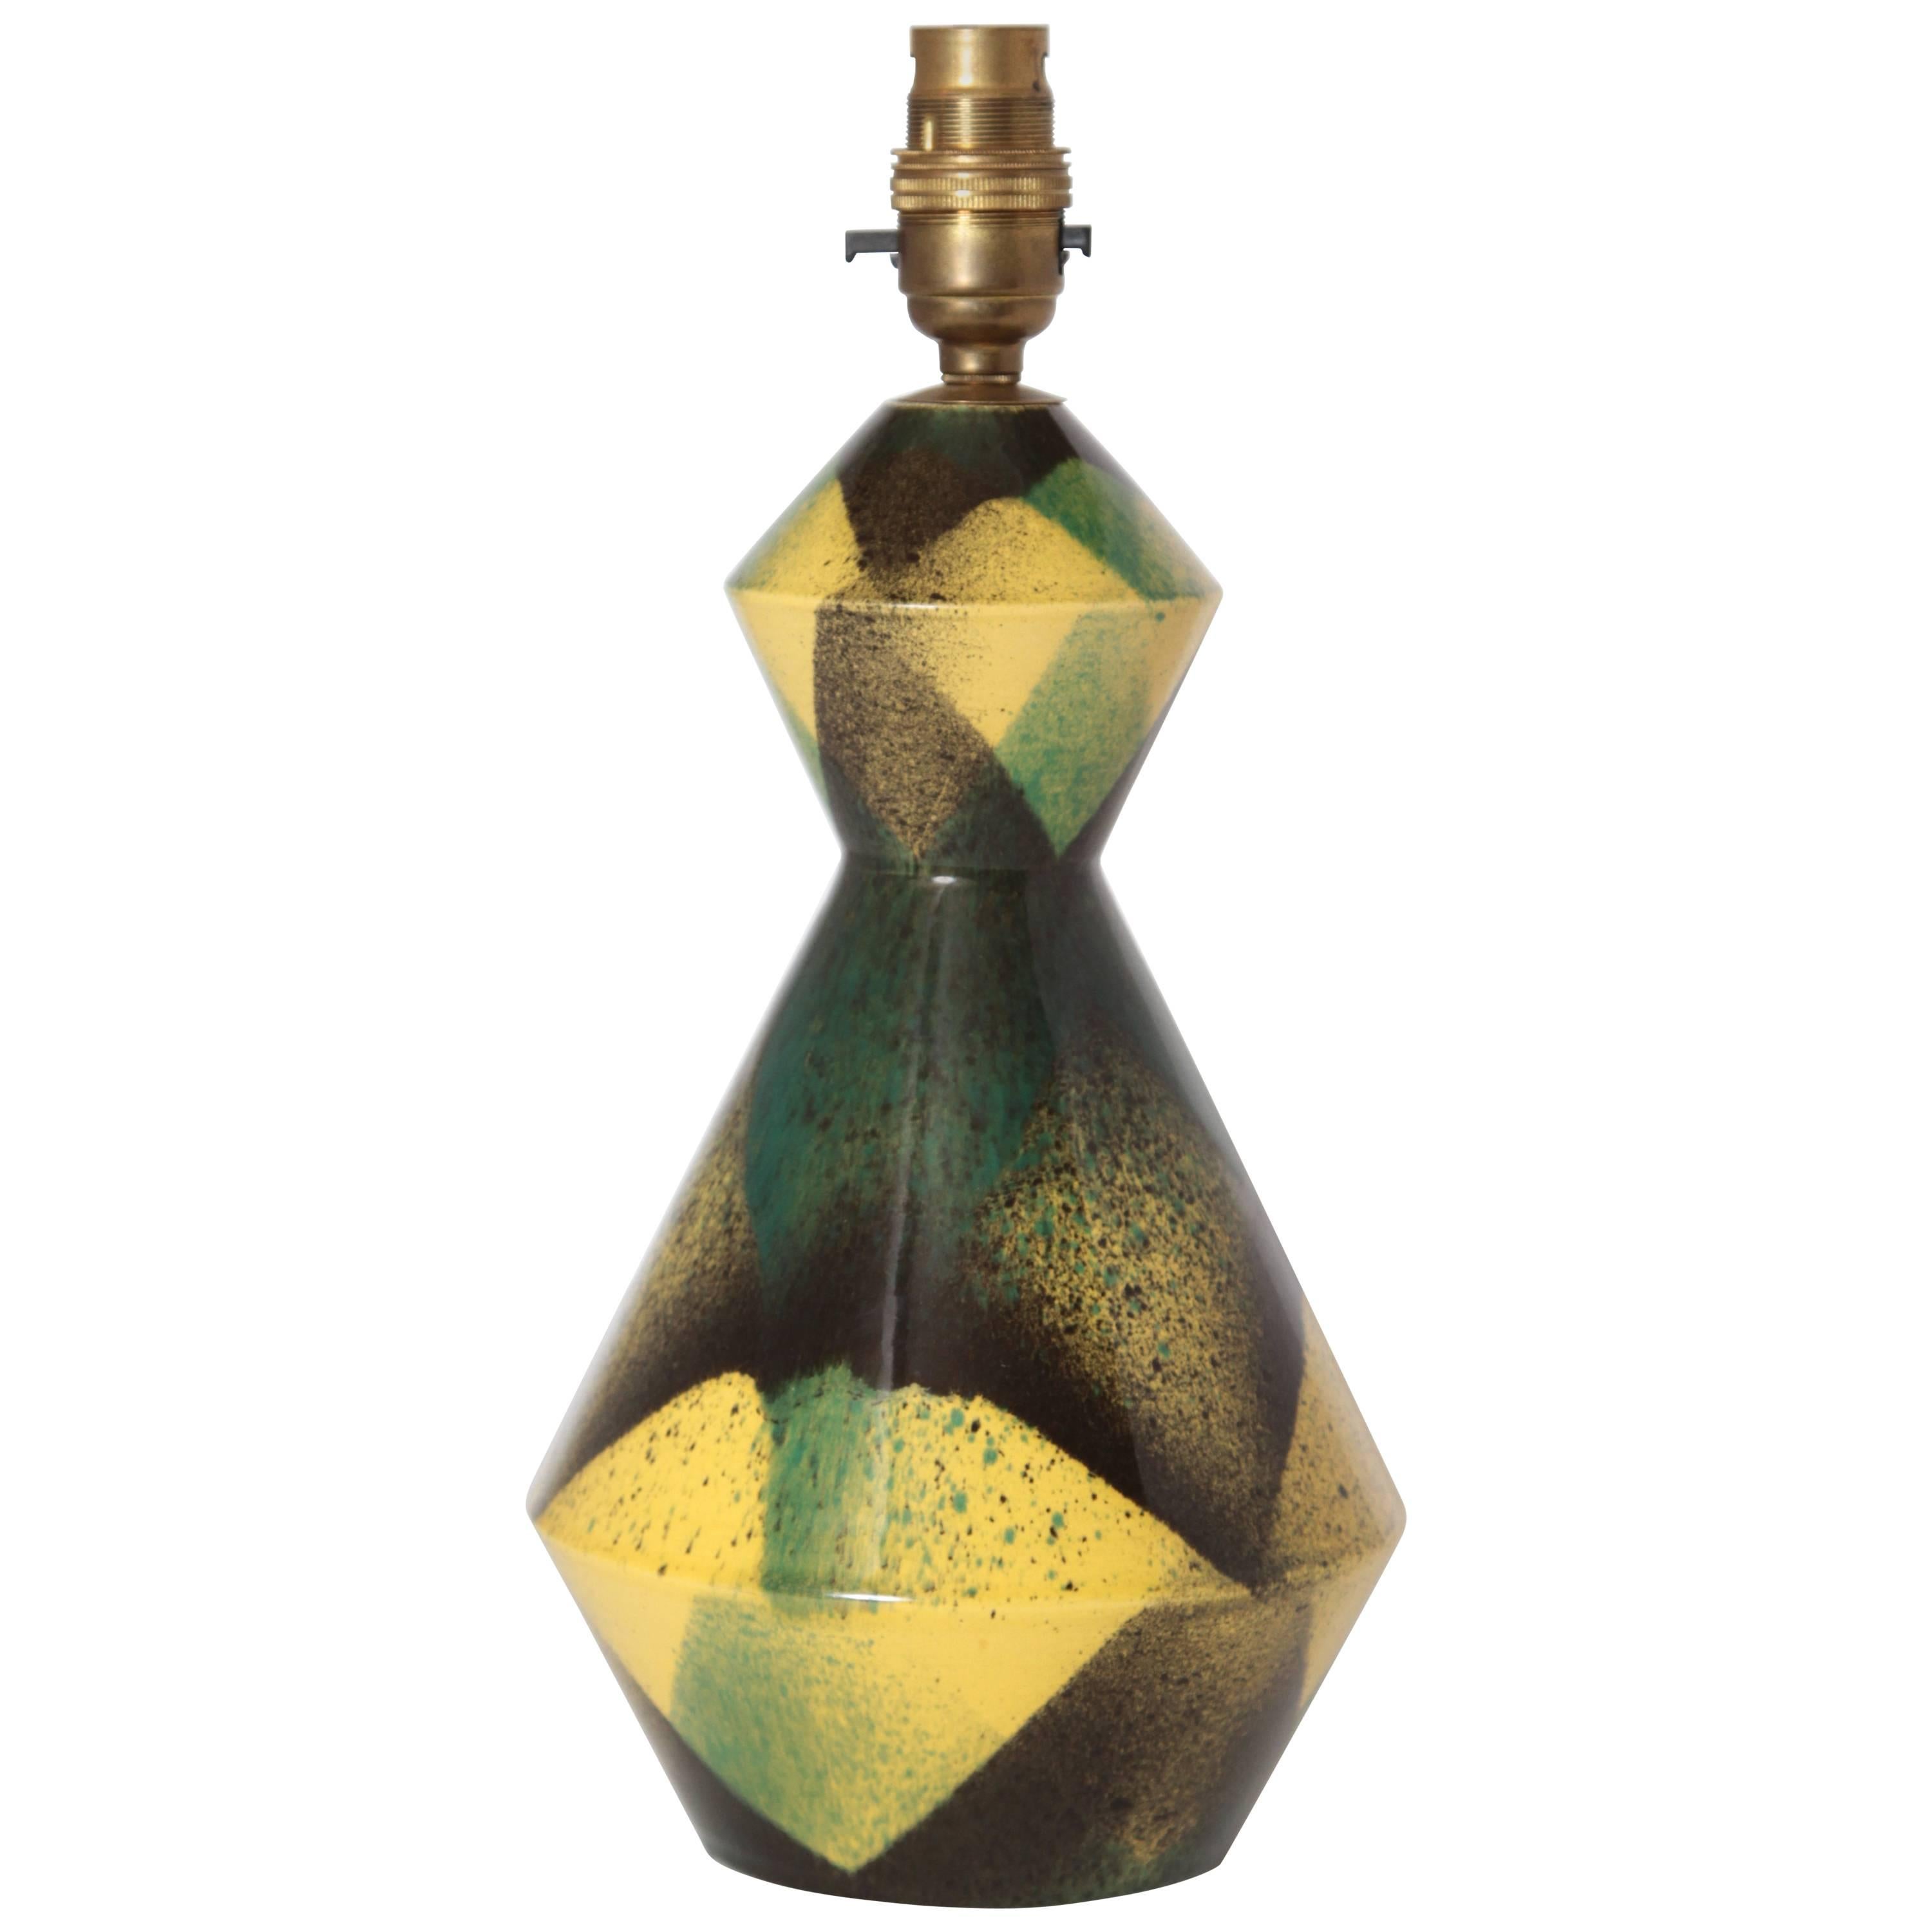 French Art Deco Cubist Marcel Guillard Glazed Stoneware Lamp for Editions Etling